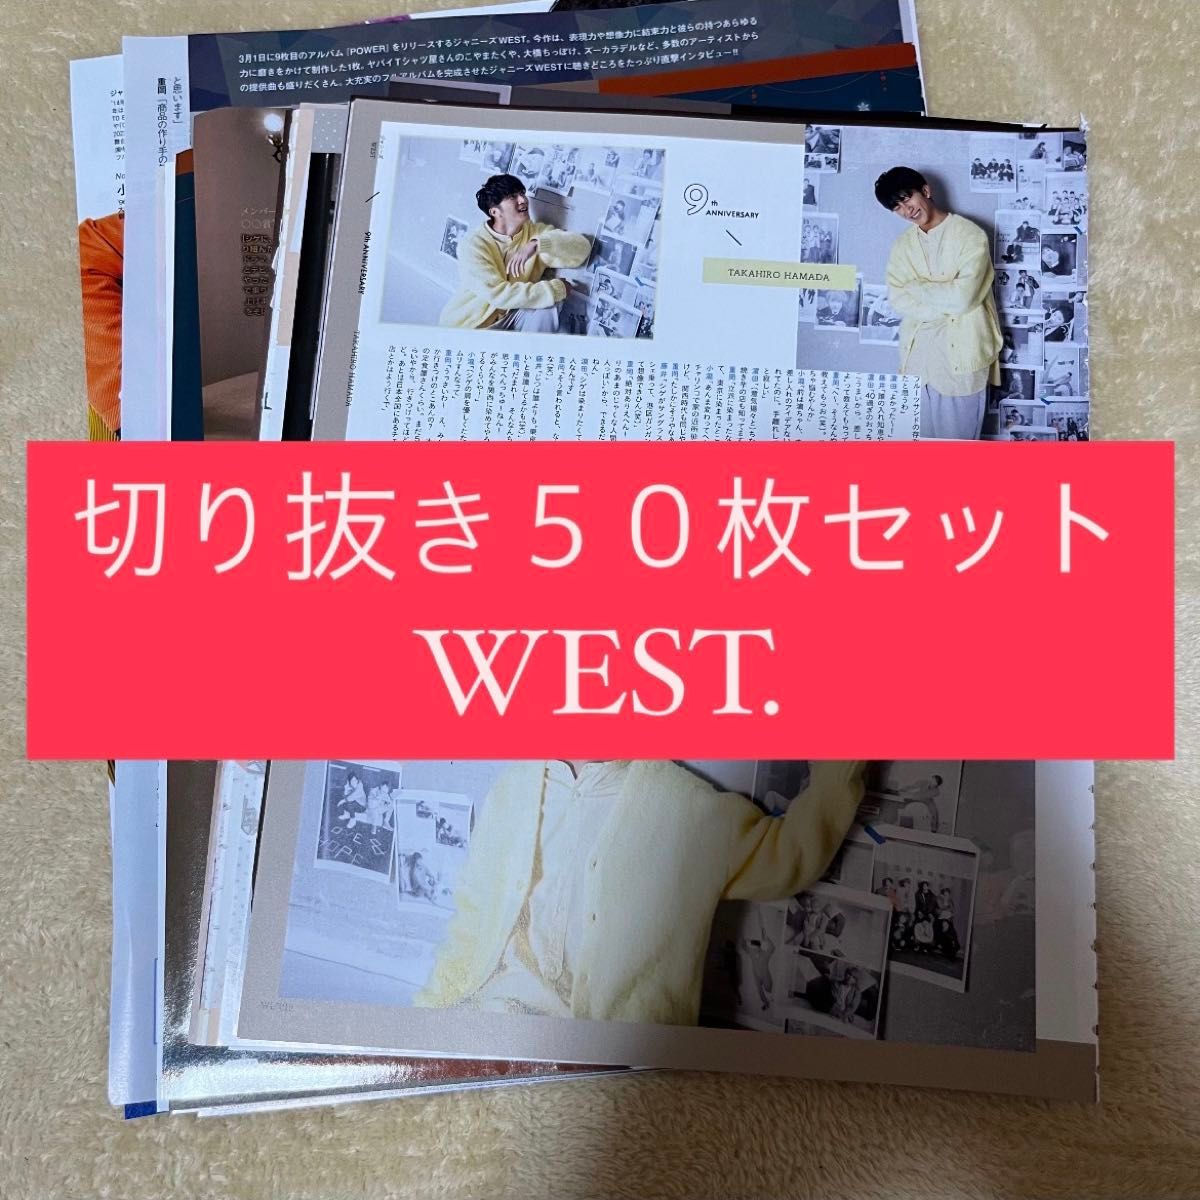 [87] WEST. ジャニーズWEST 切り抜き 50枚 まとめ売り 大量